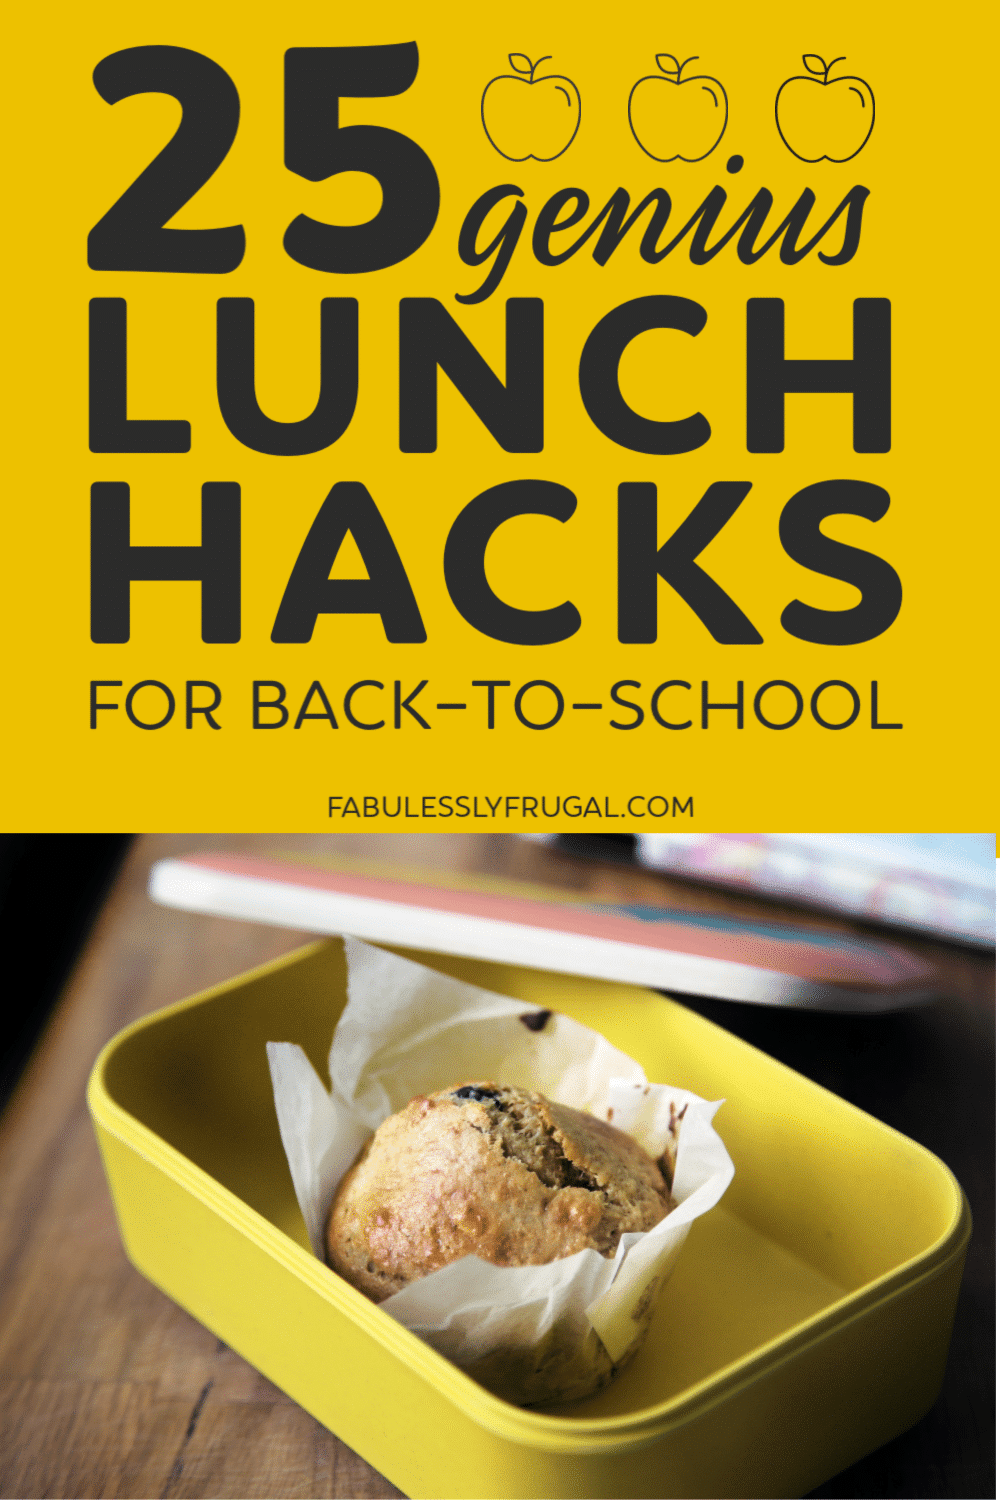 Genius lunch hacks for back to school